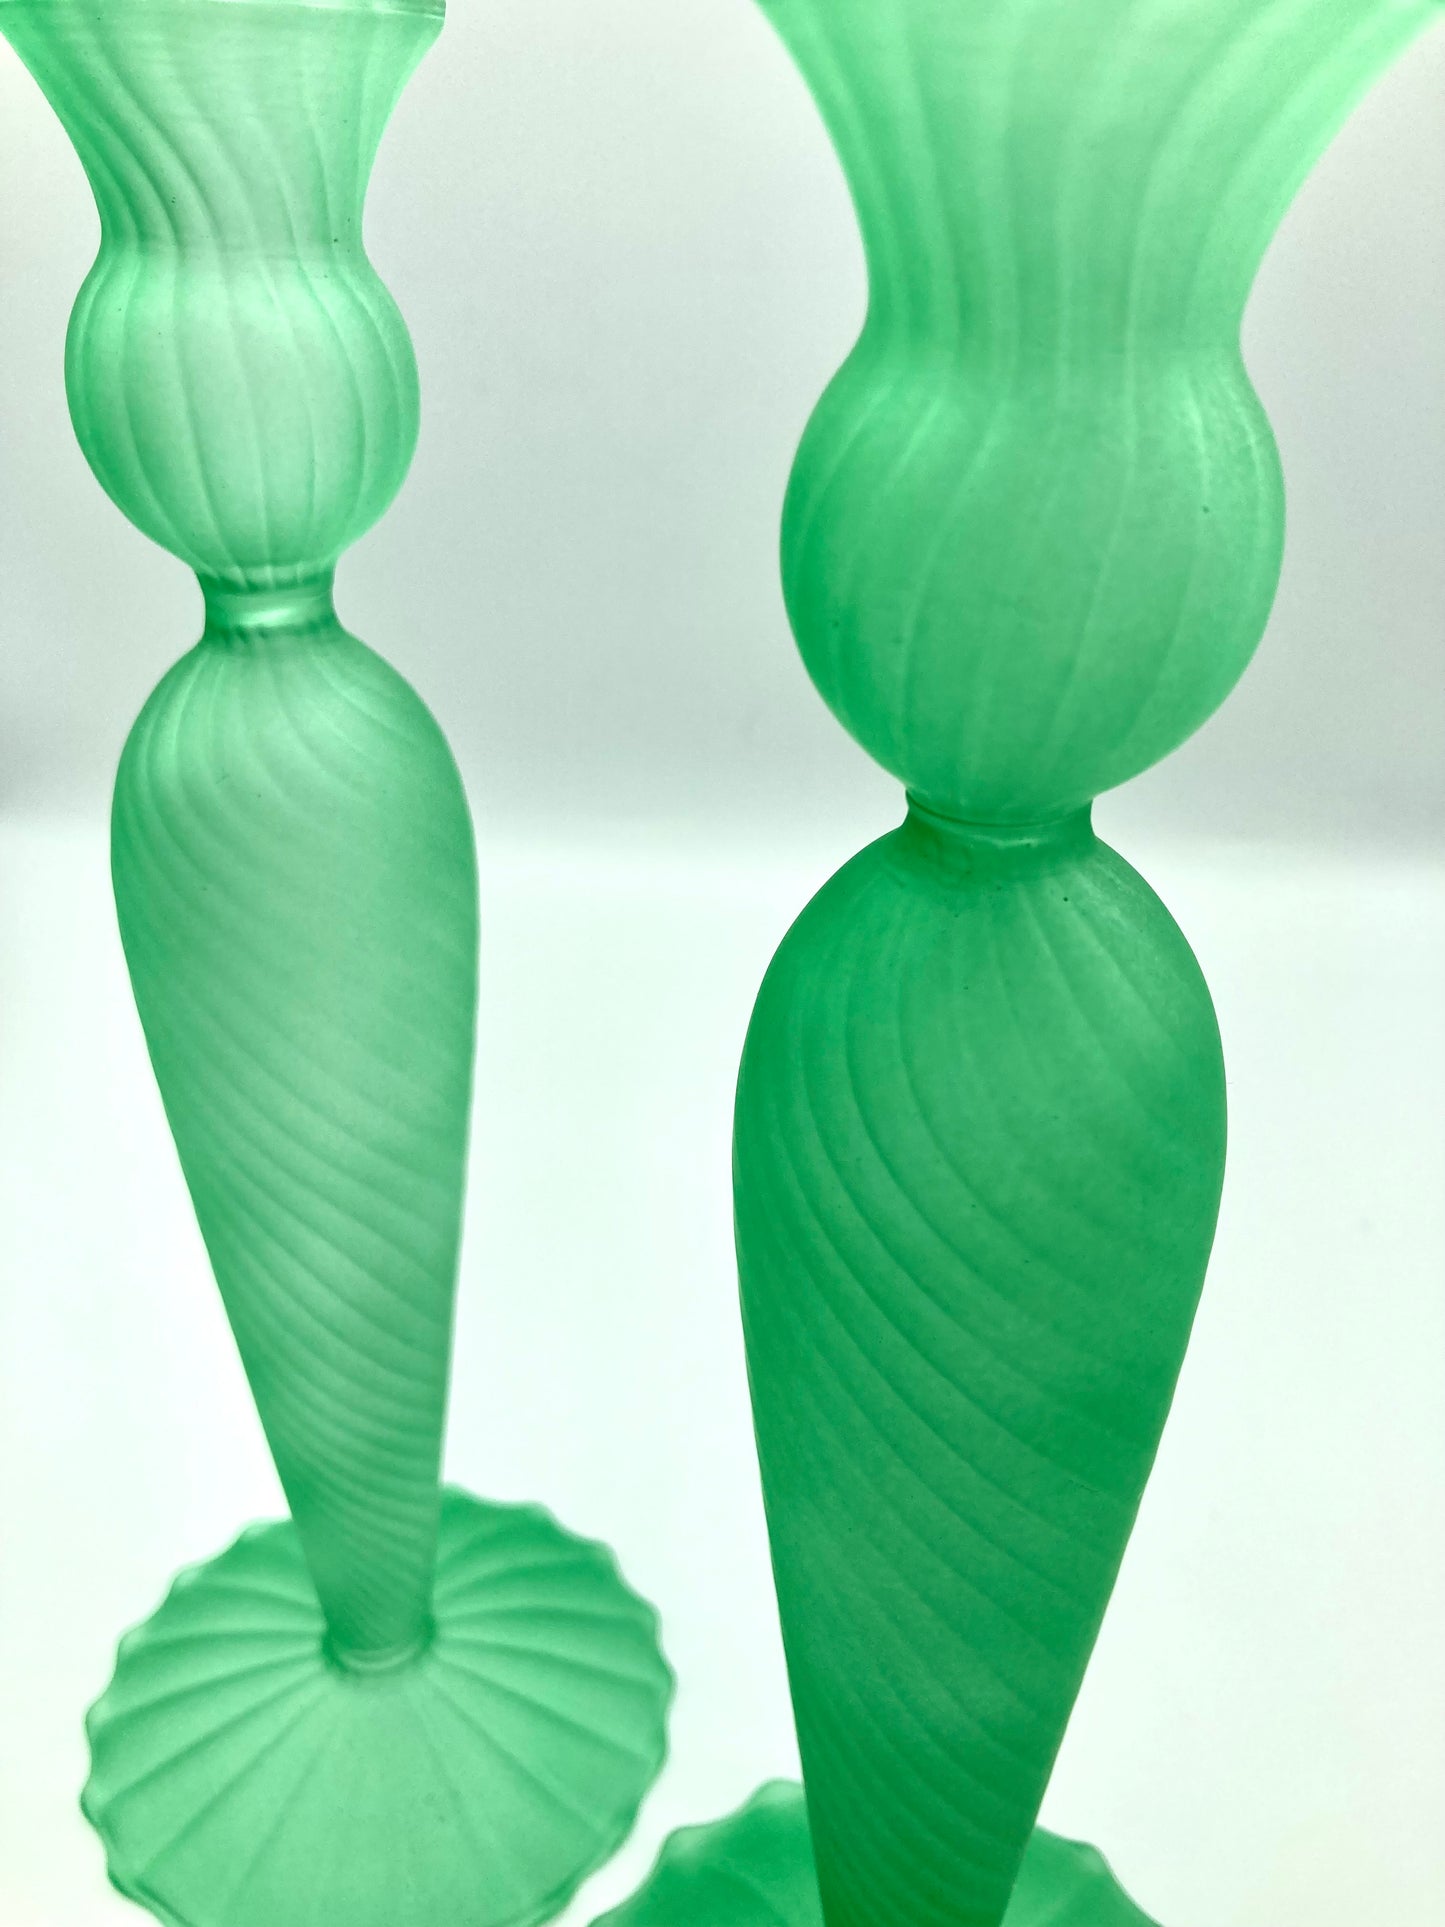 Green Glass Slim Candlesticks Set of 2